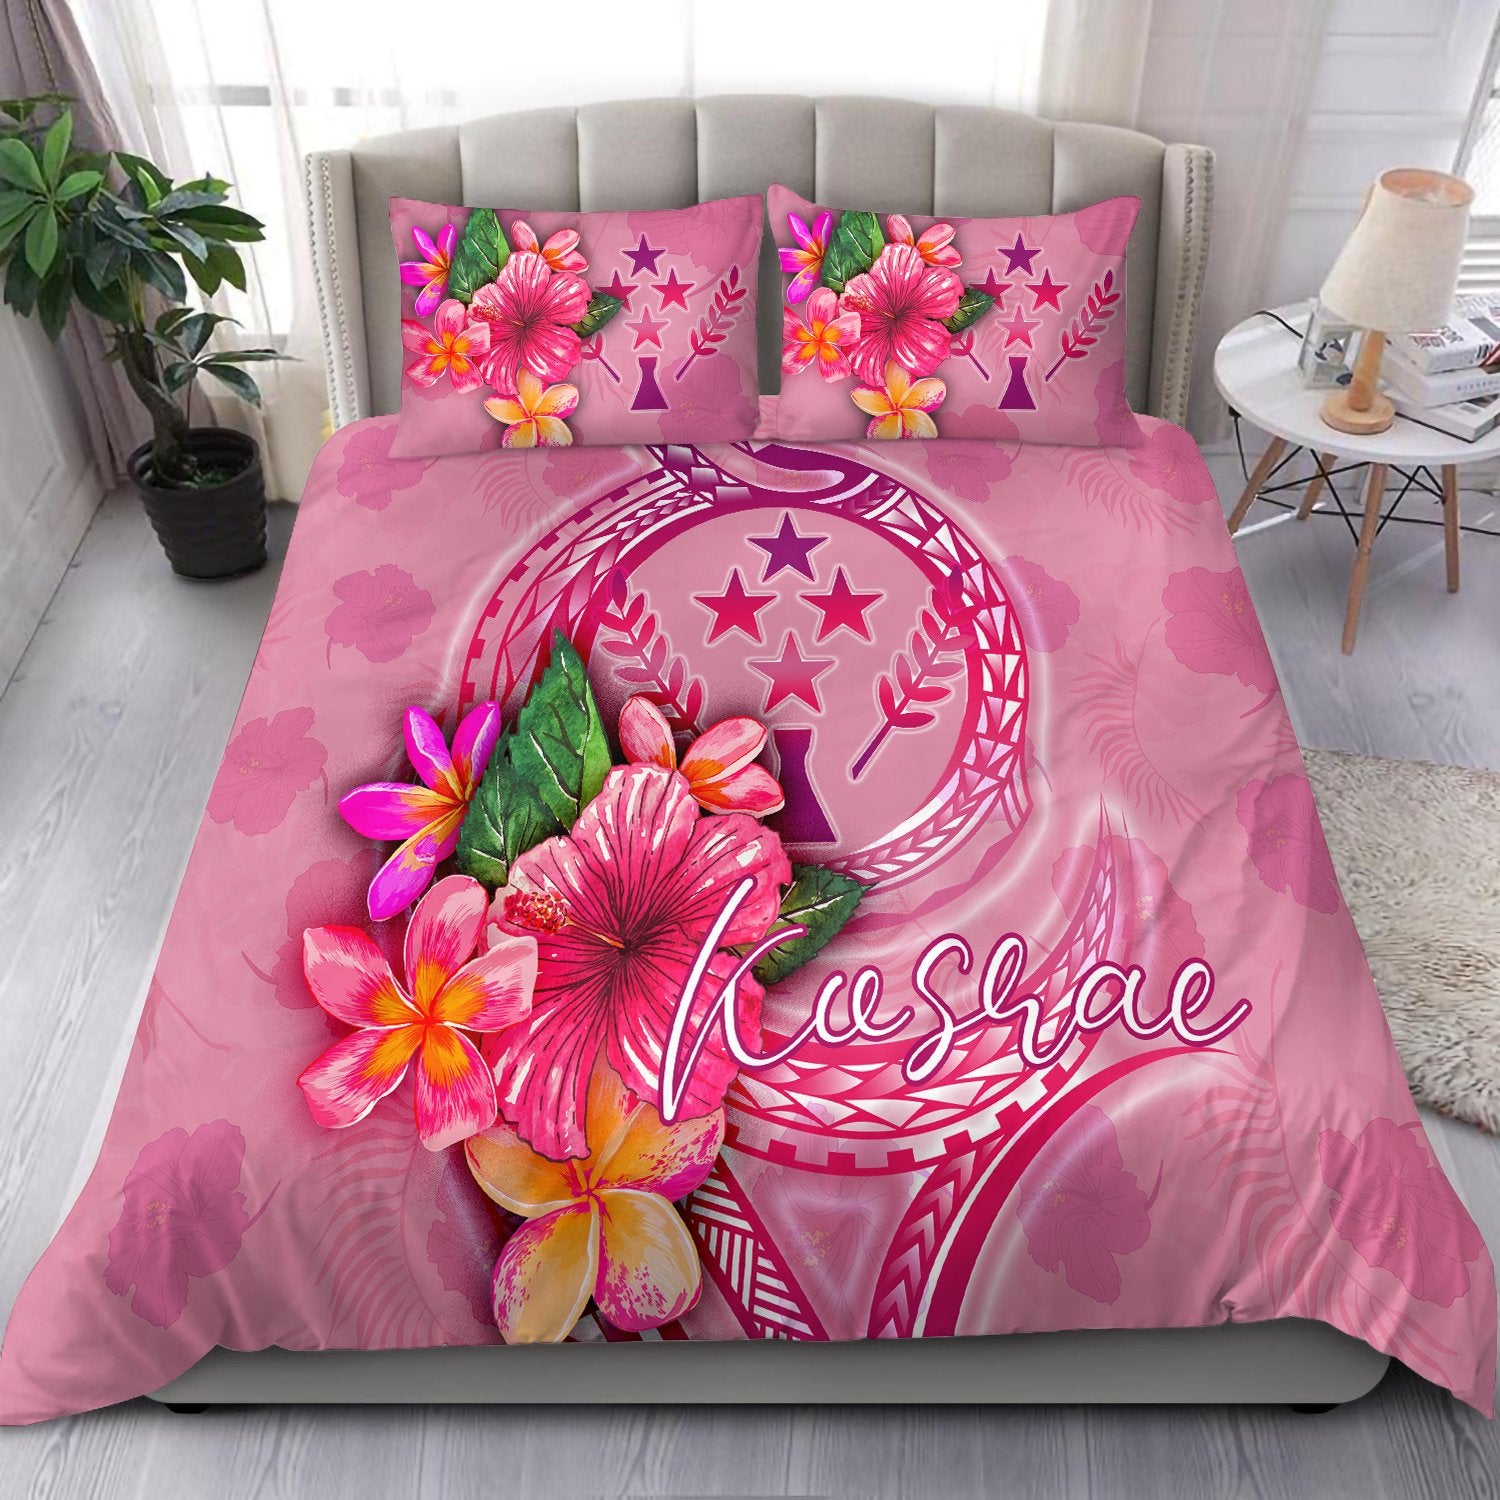 Kosrae Polynesian Bedding Set - Floral With Seal Pink Pink - Polynesian Pride